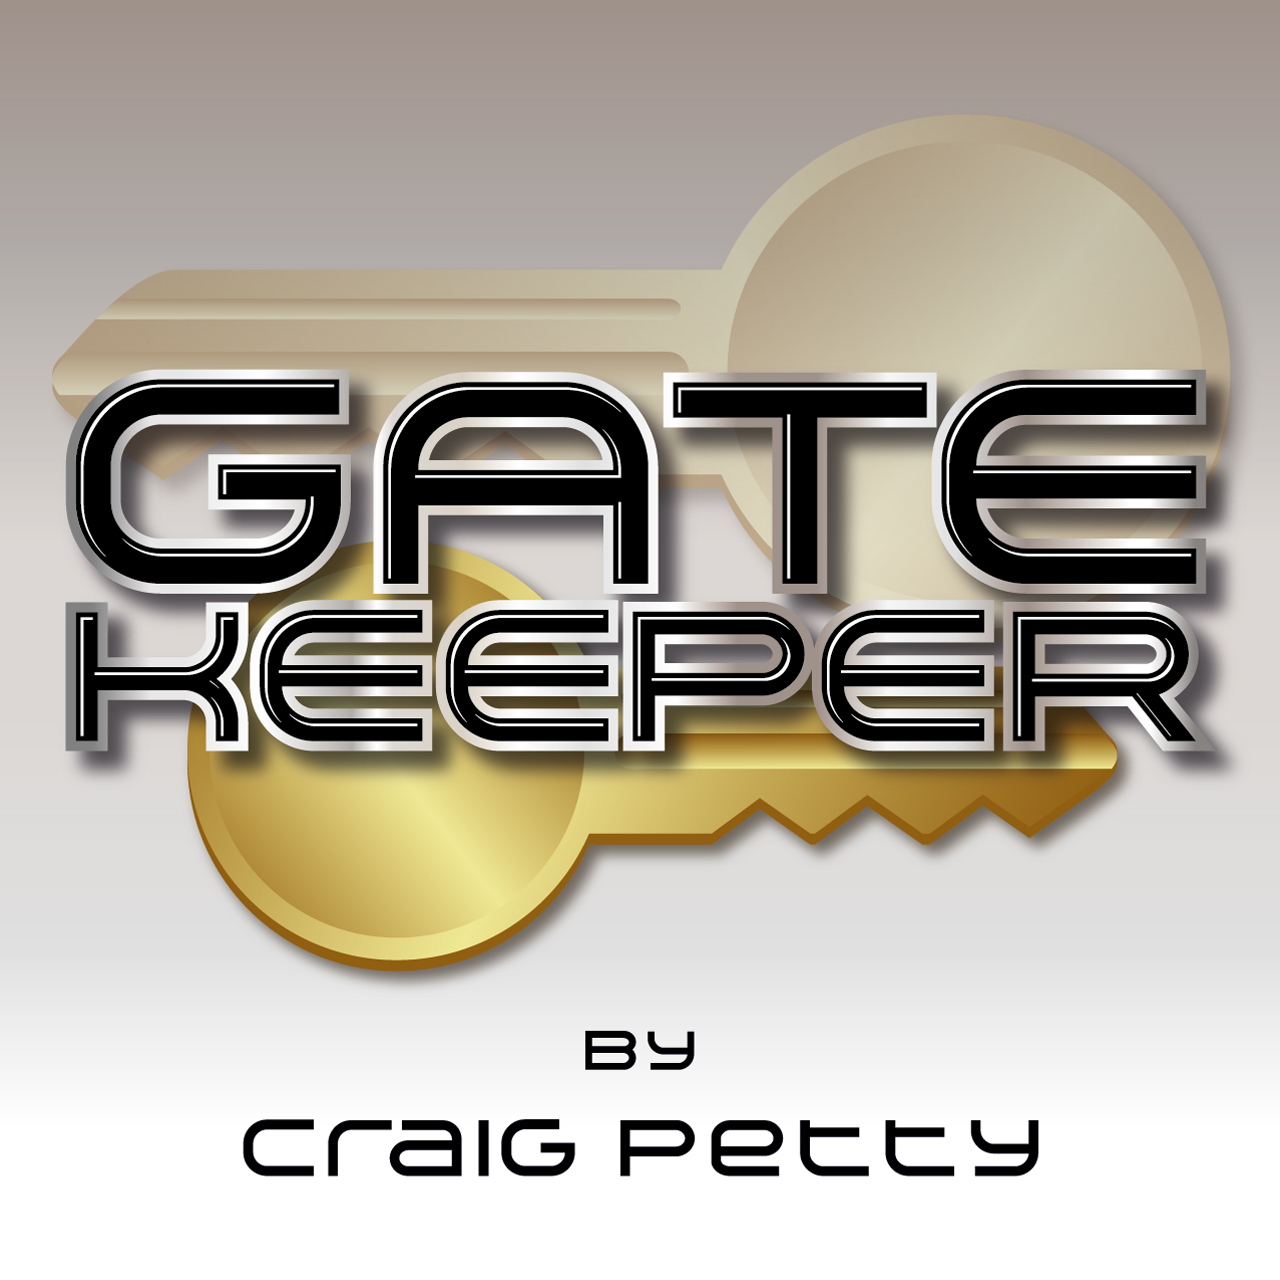 Gatekeeper by Craig Petty (Mp4 Video Magic Download)